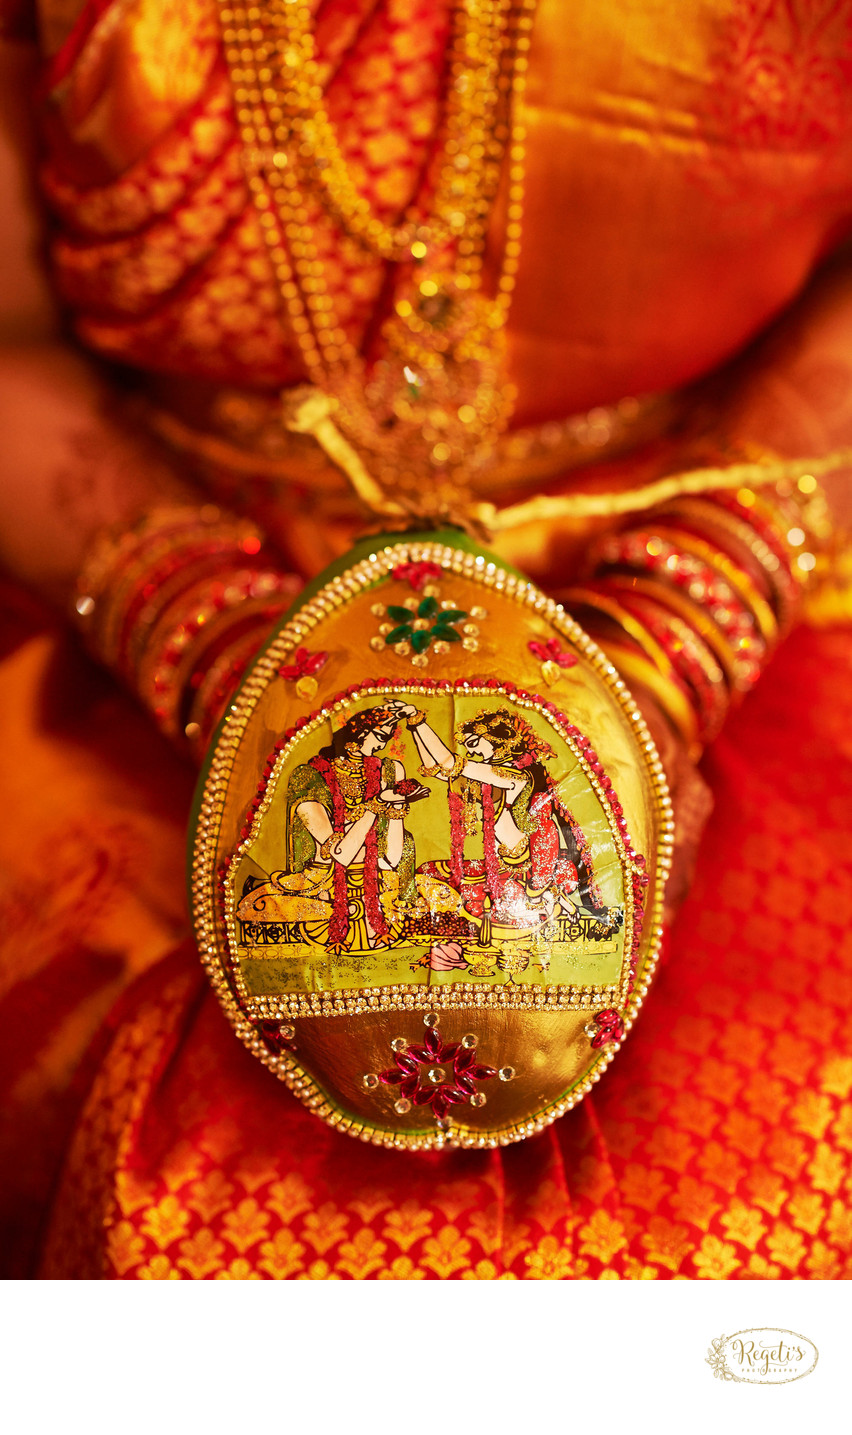 Telugu bride holding a decorated coconut